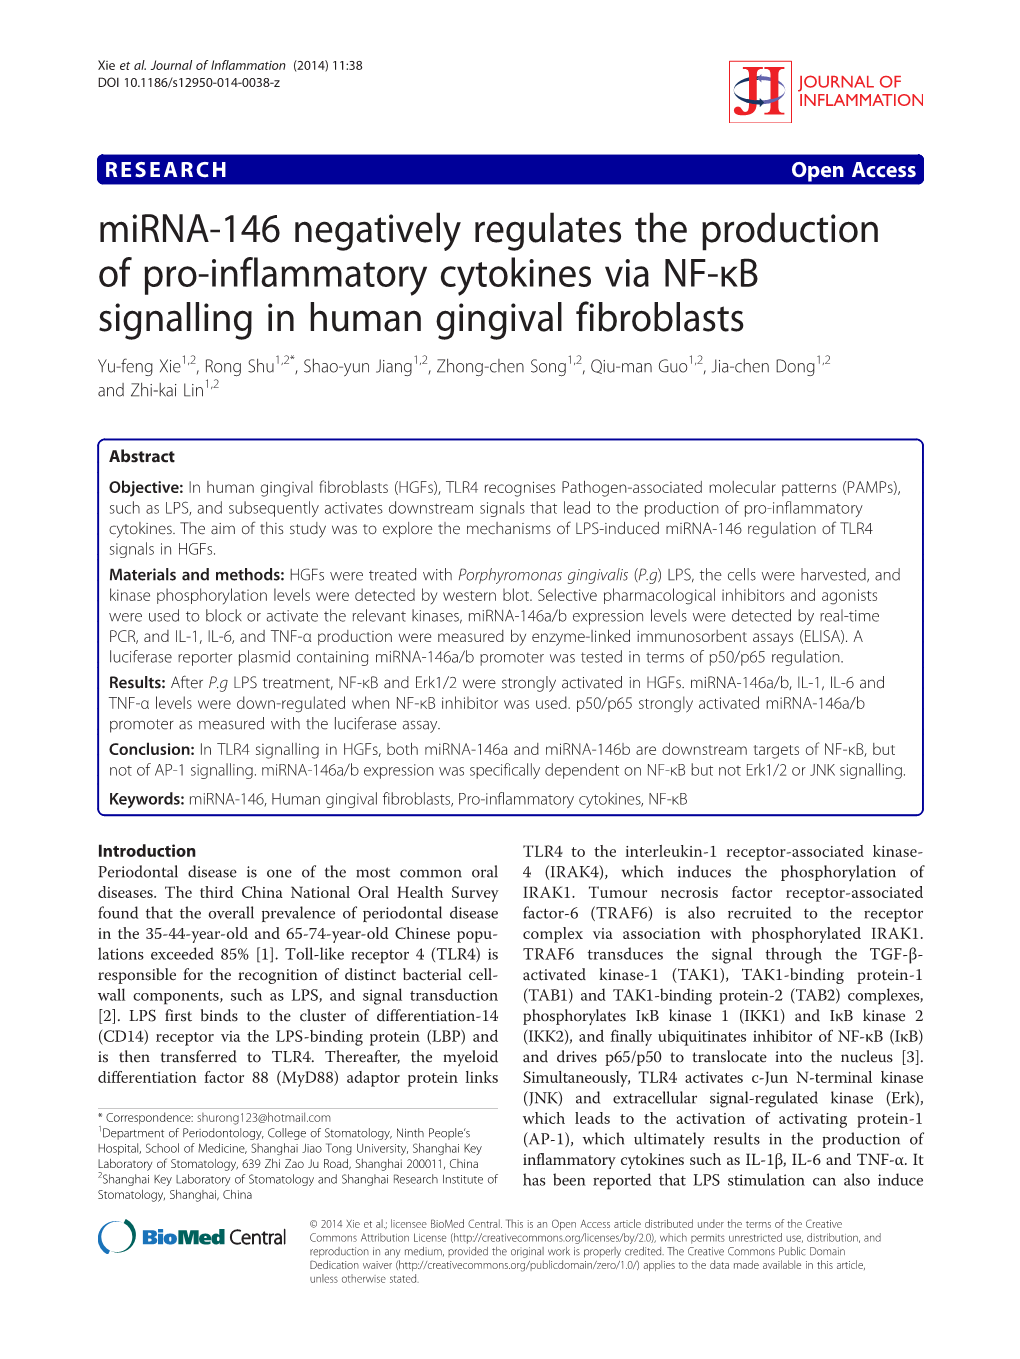 Mirna-146 Negatively Regulates the Production of Pro-Inflammatory